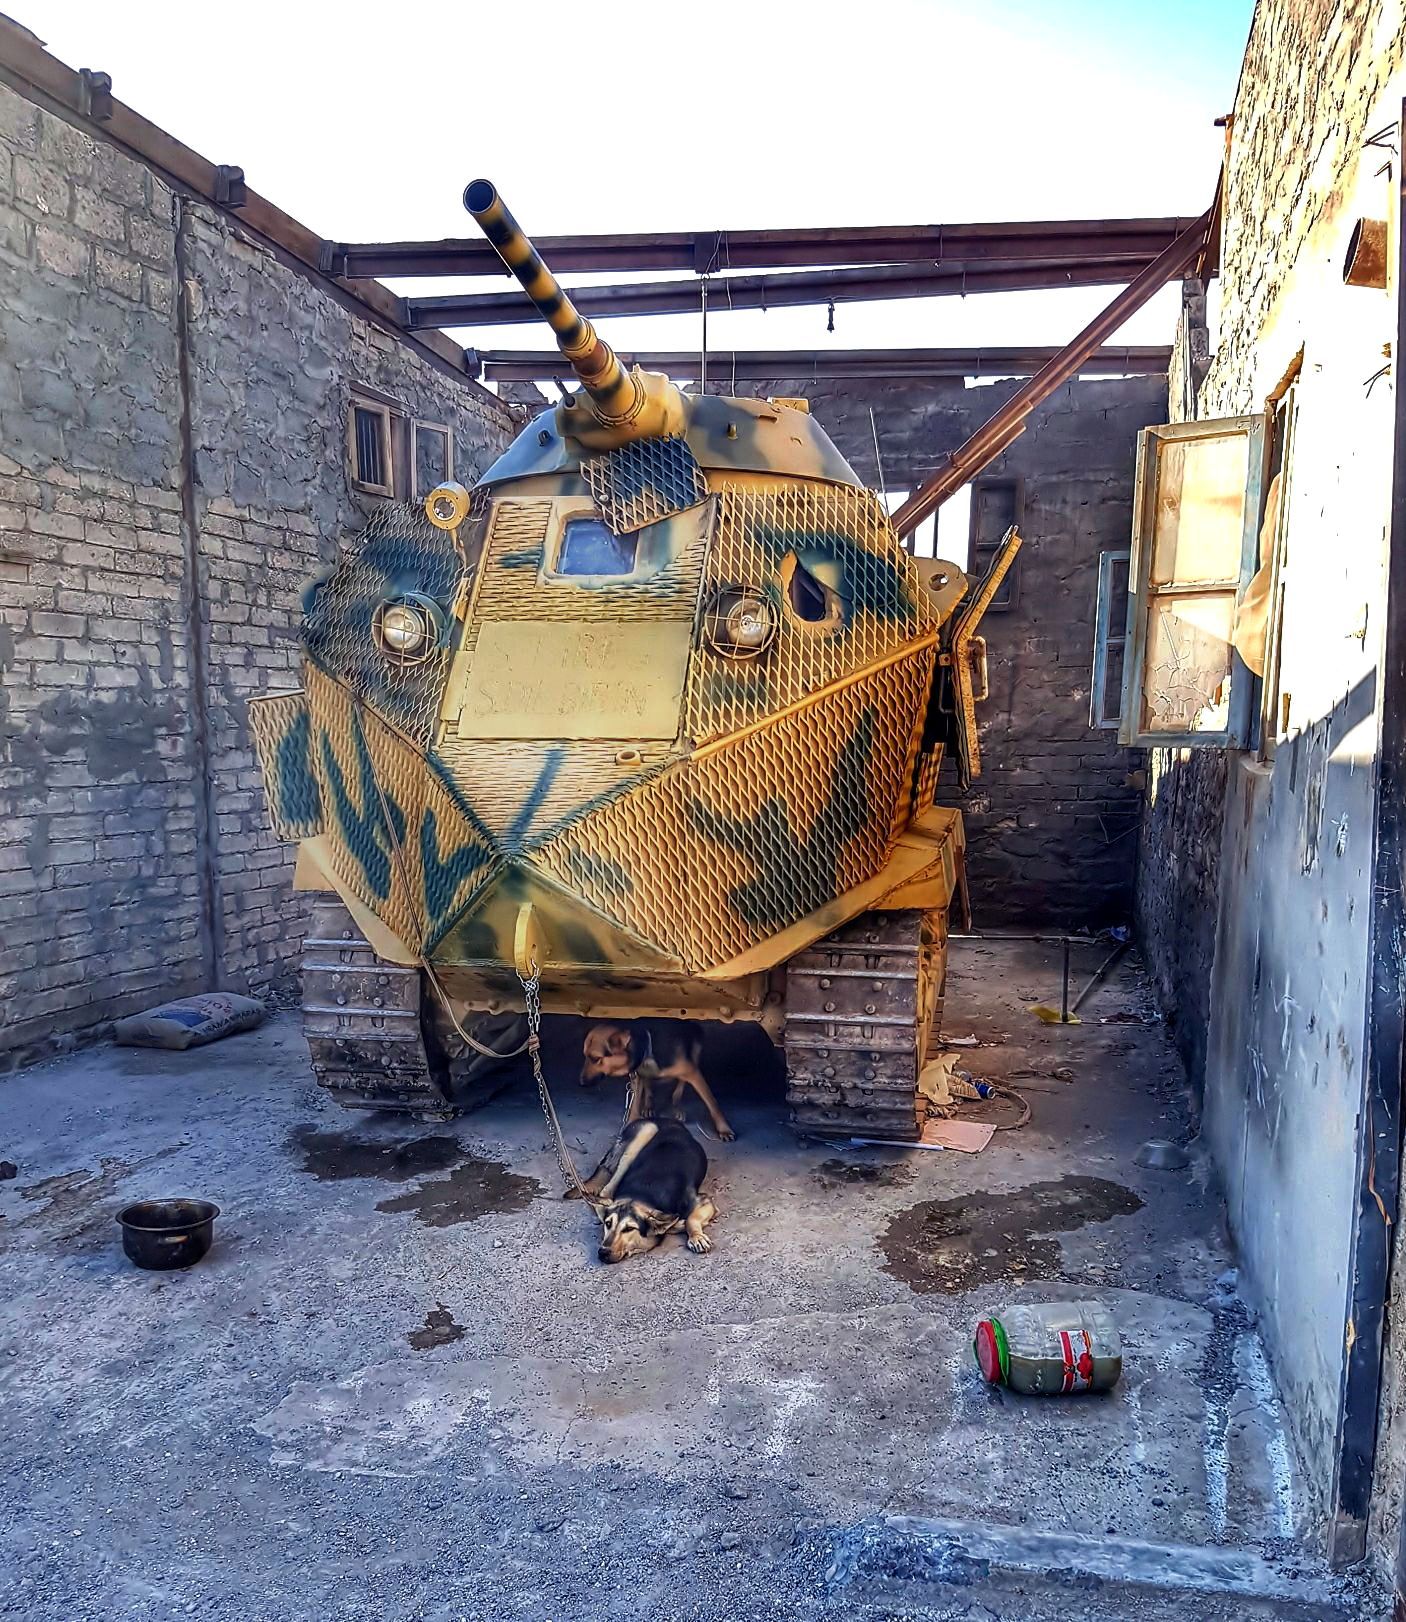 Kurdish armored tractor - Armored vehicles, Tractor, Kurds, Iraq, Shushpanzer, BMP-1